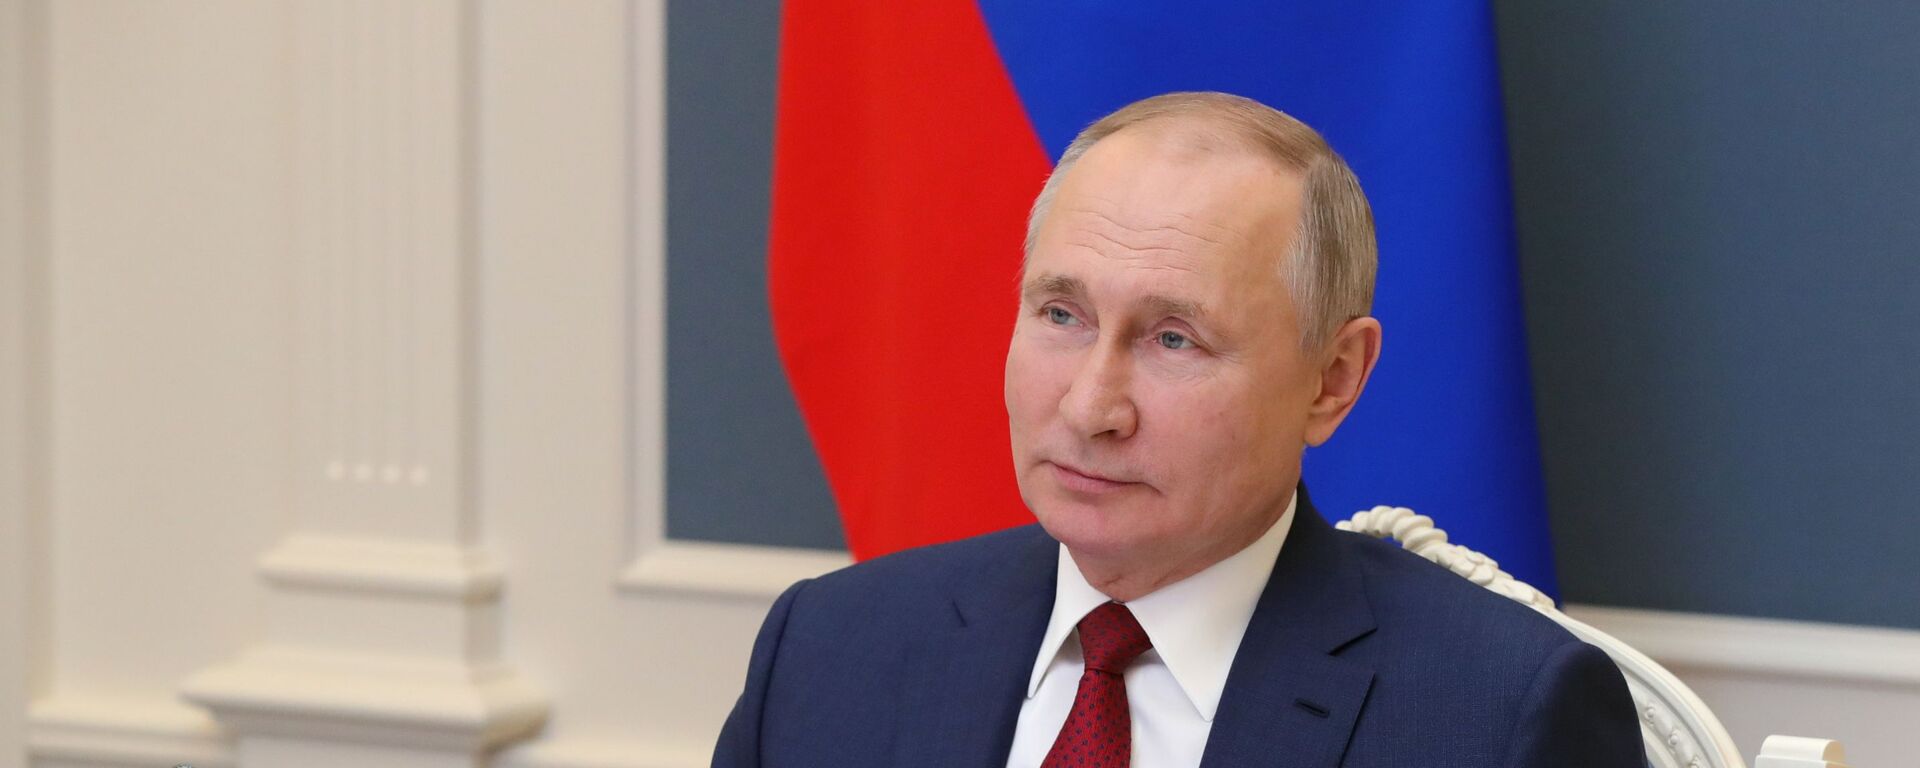 Президент РФ В. Путин выступил на сессии онлайн-форума Давосская повестка дня 2021 - Sputnik Moldova, 1920, 27.01.2021